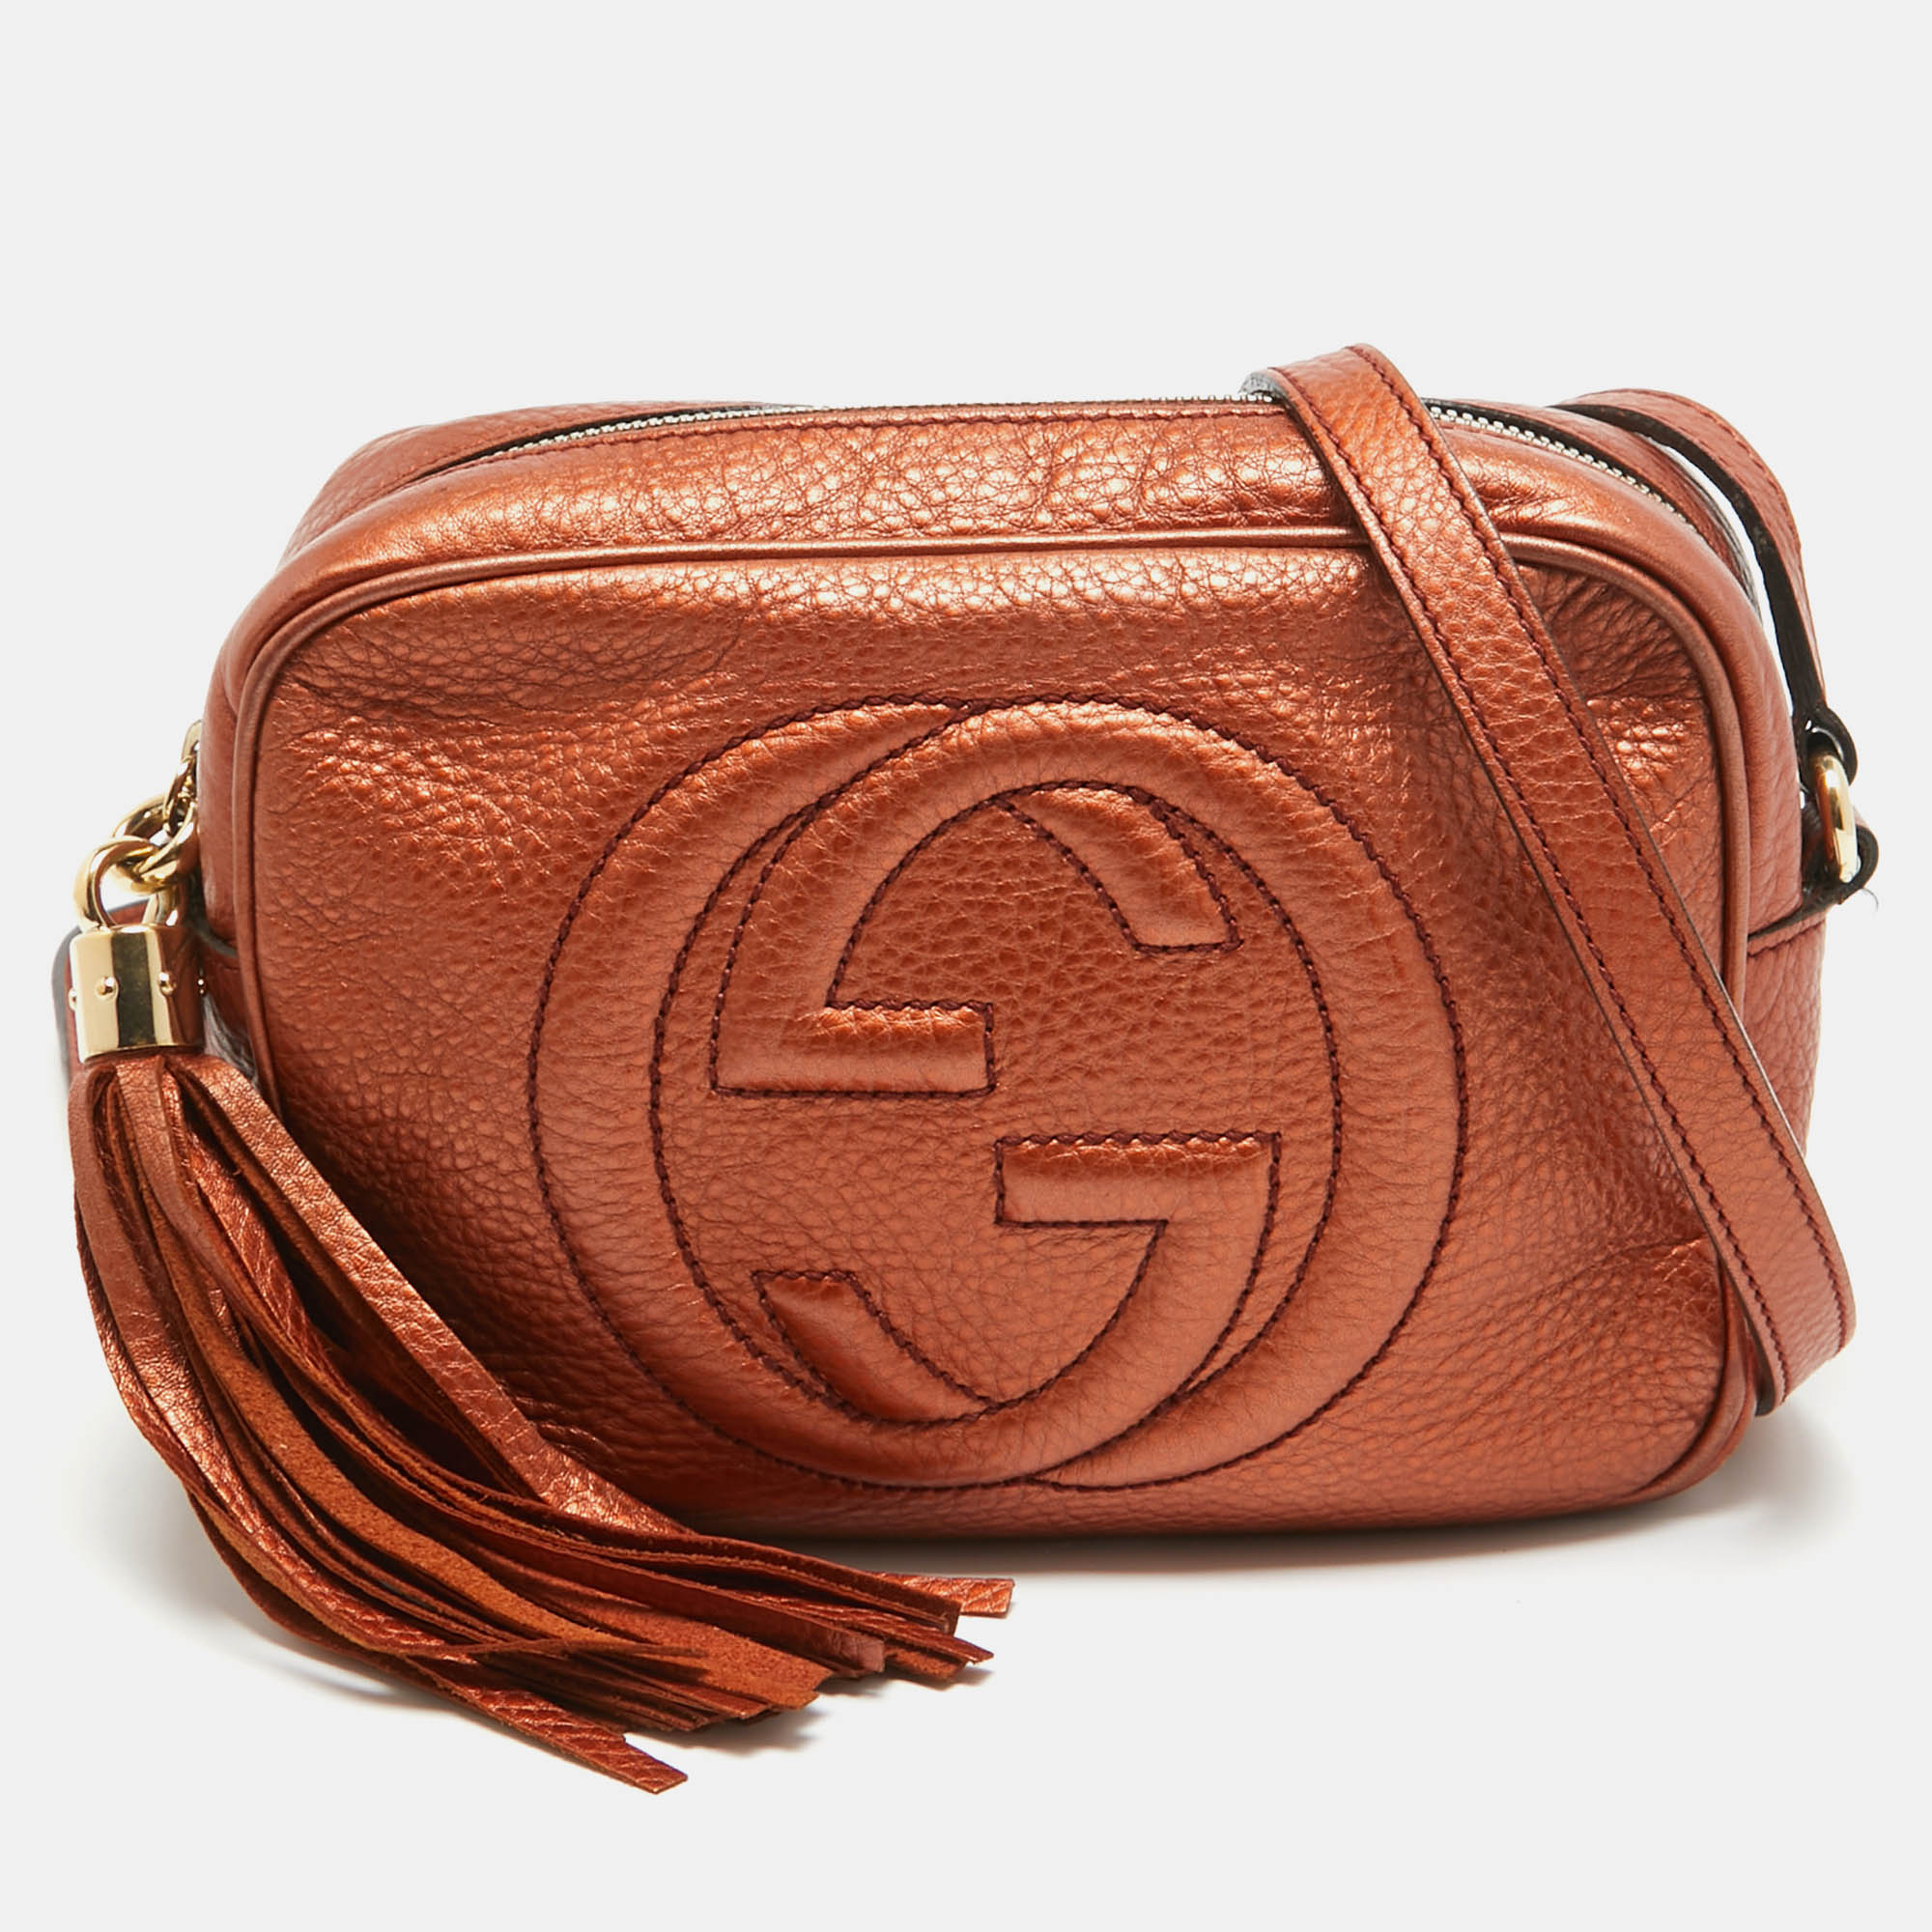 Gucci copper brown leather small soho disco crossbody bag